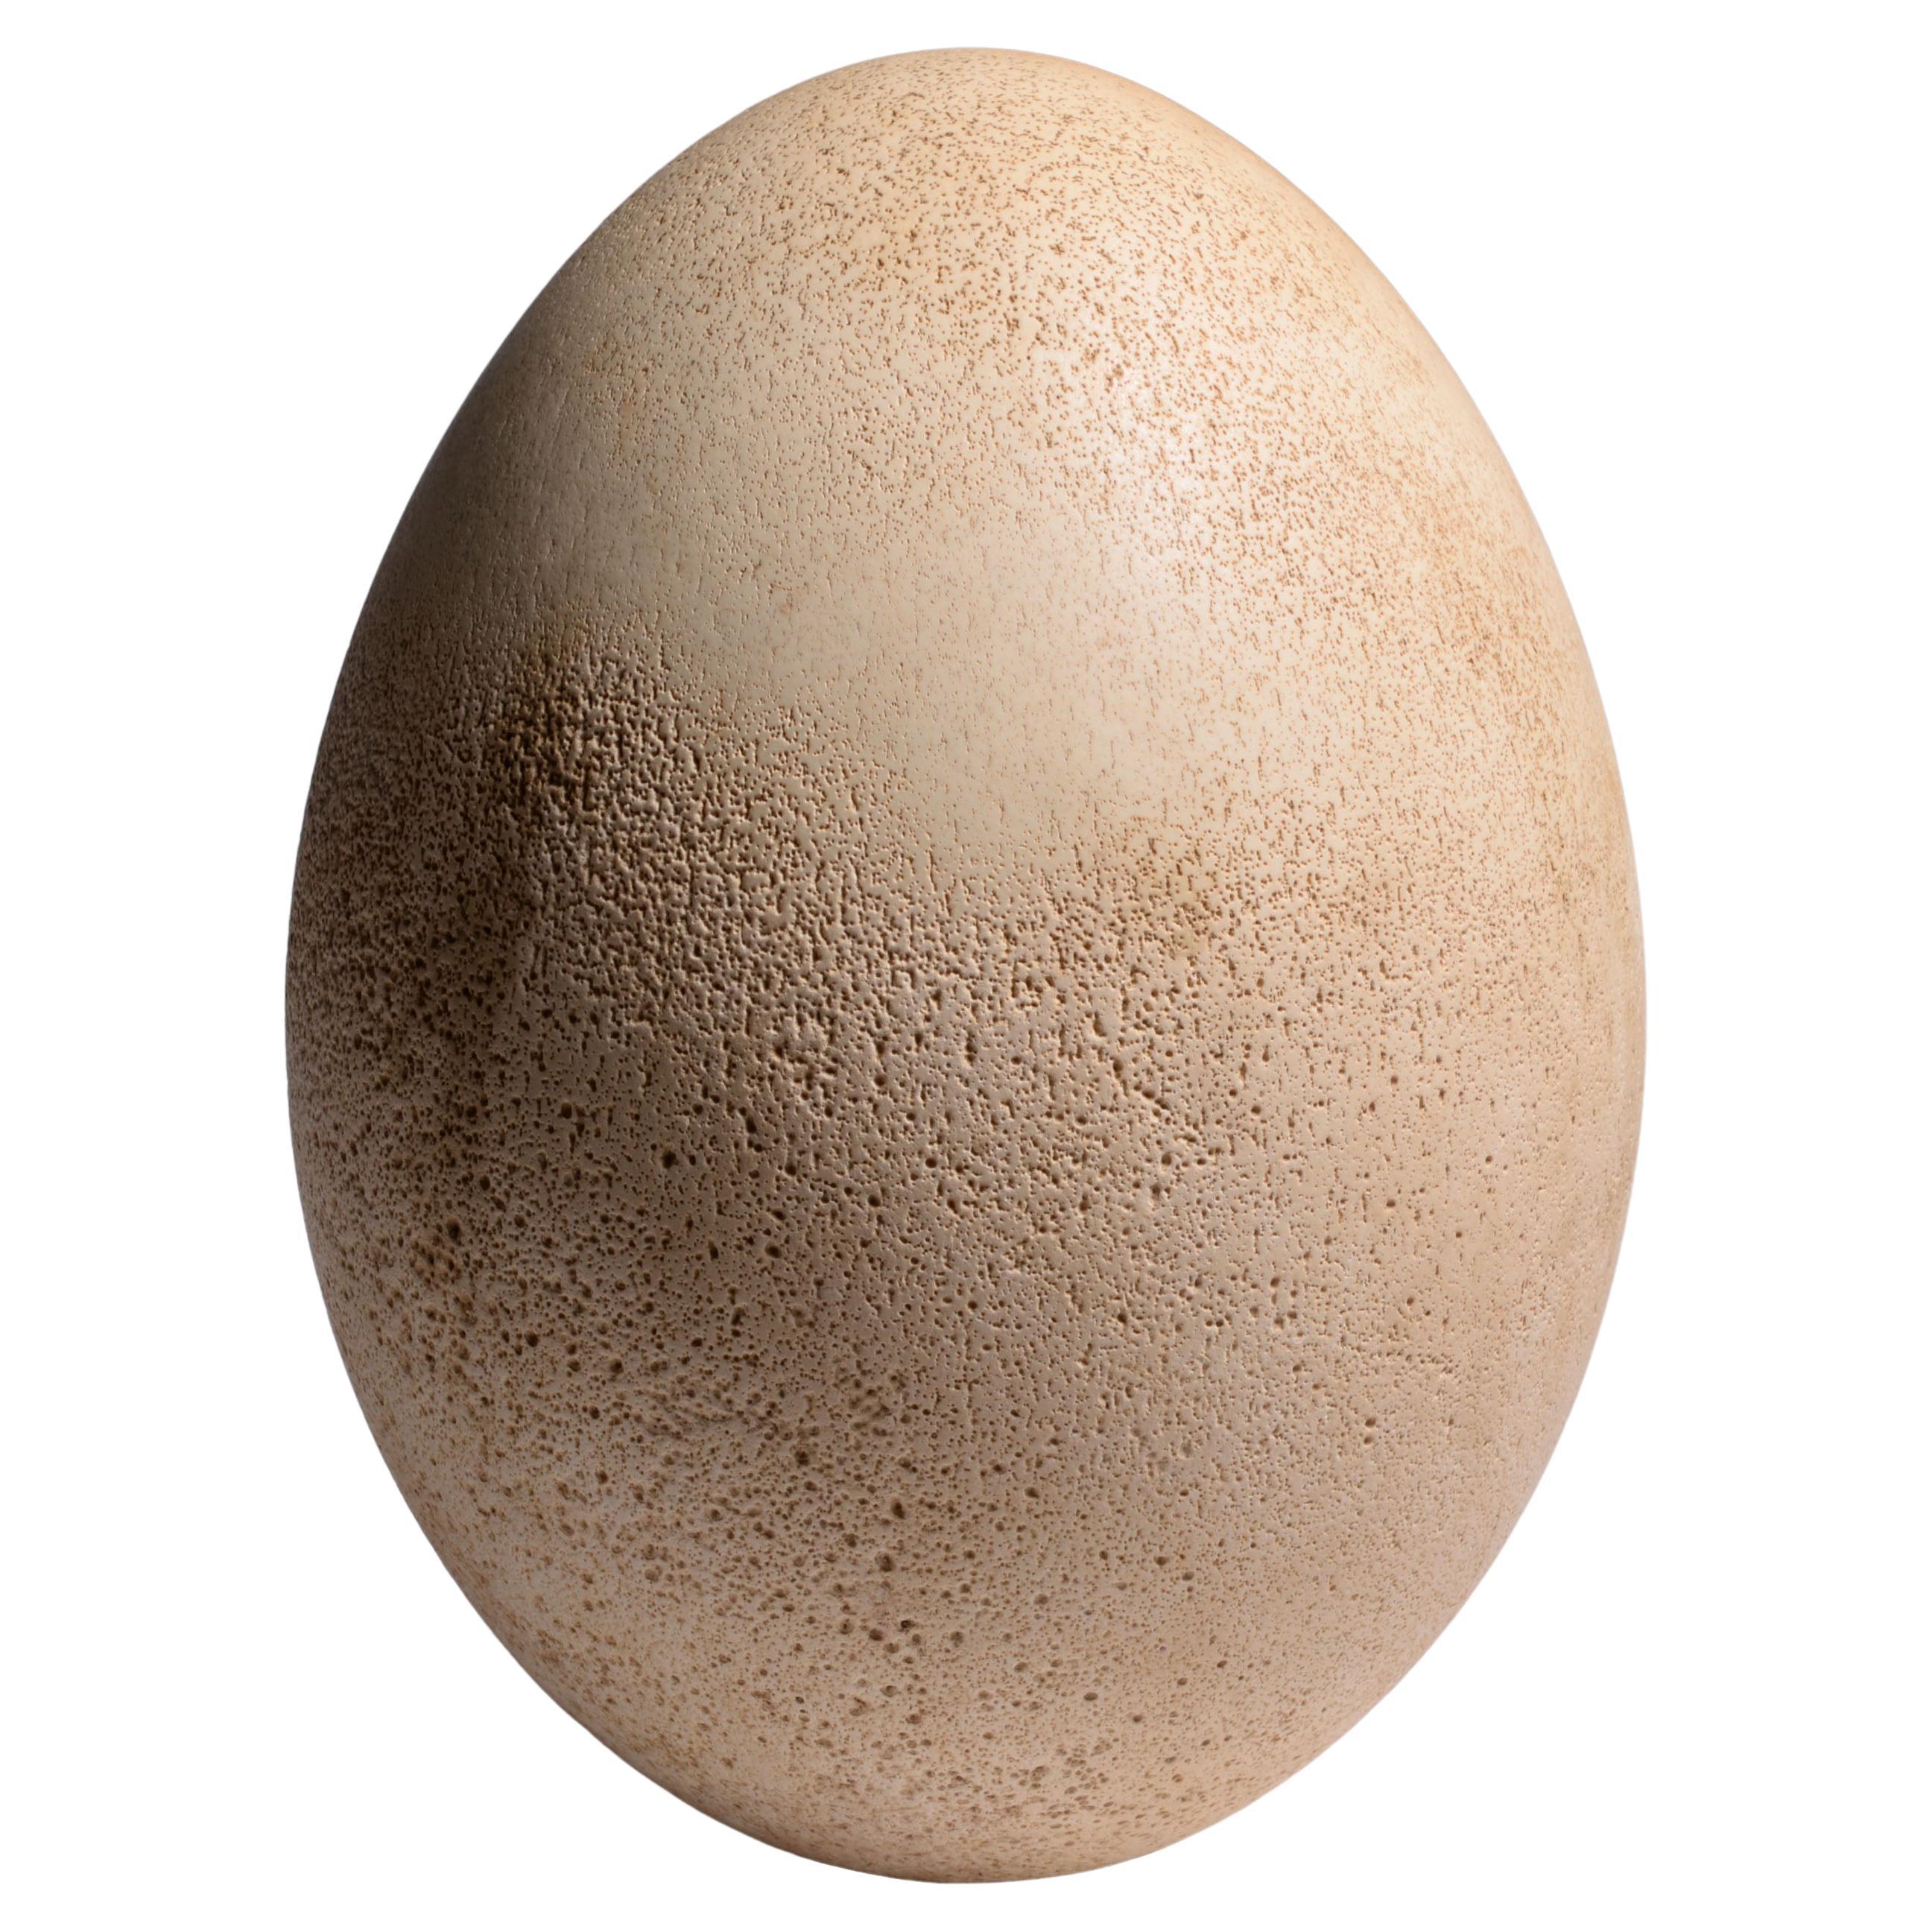 Largest Egg Ever Laid - Intact Elephant Bird Egg at 1stDibs